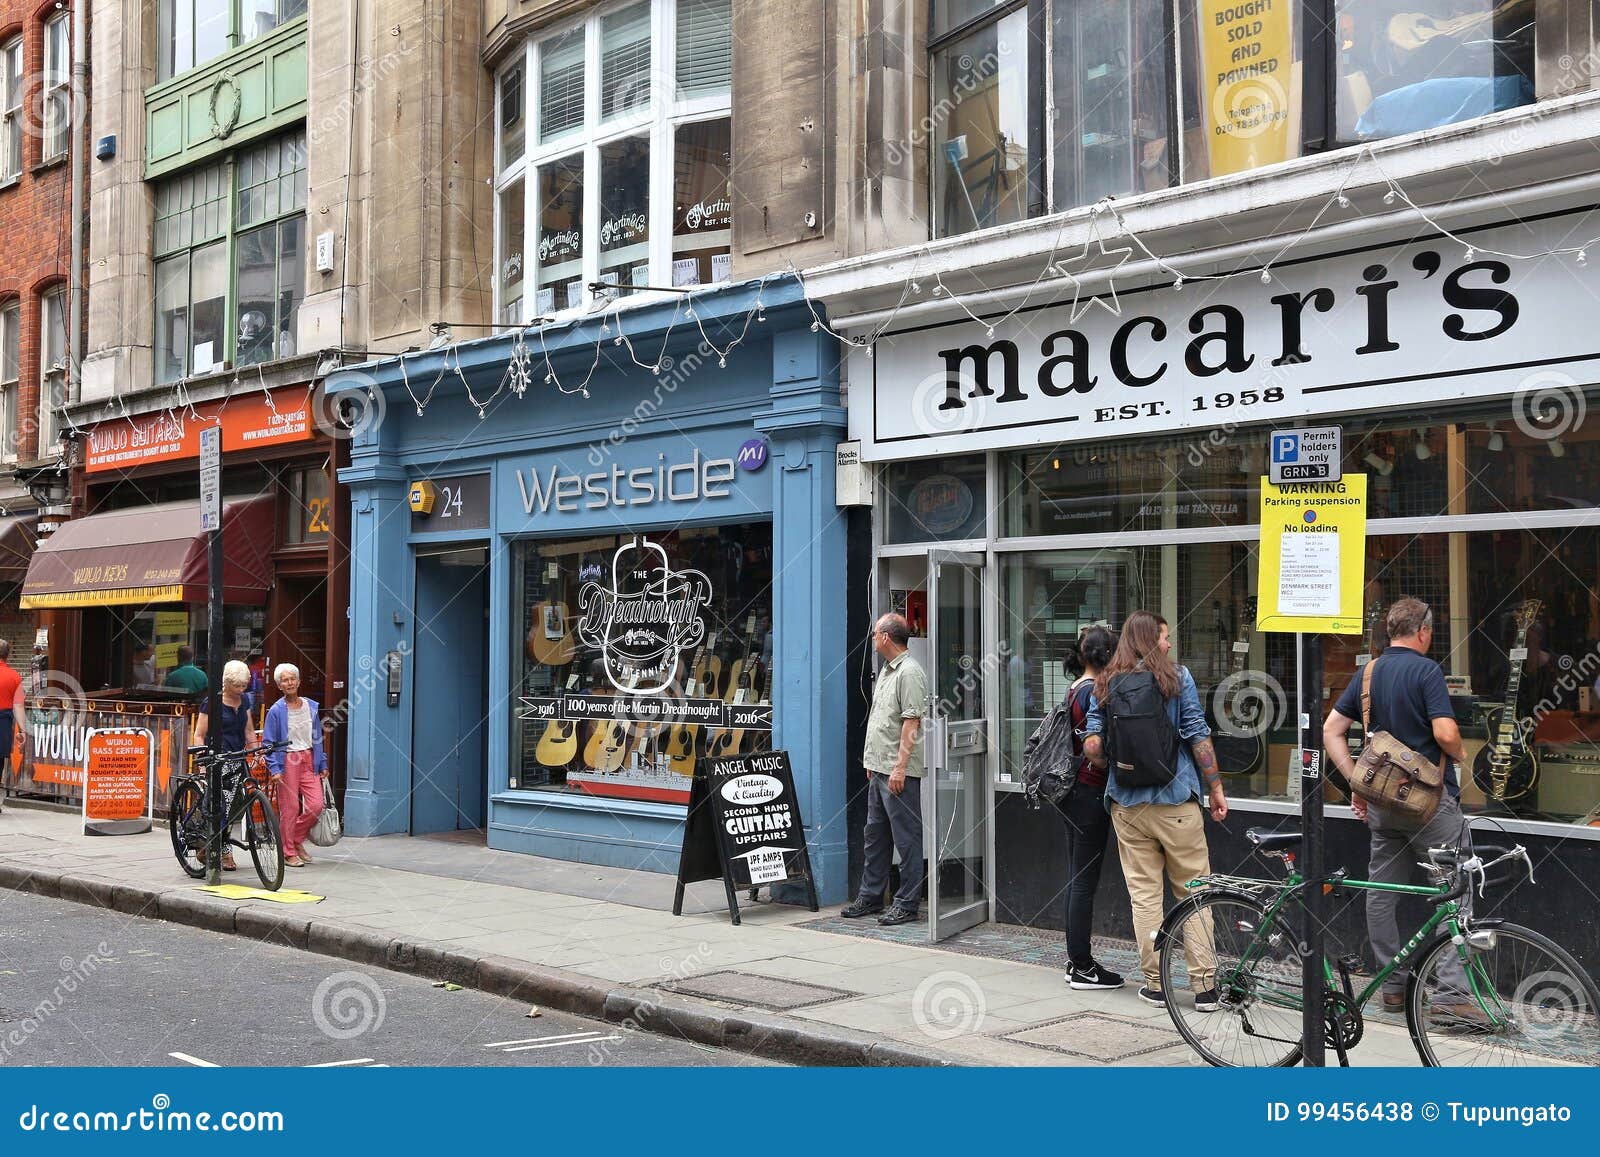 London music shops editorial stock photo. Image of macari - 99456438